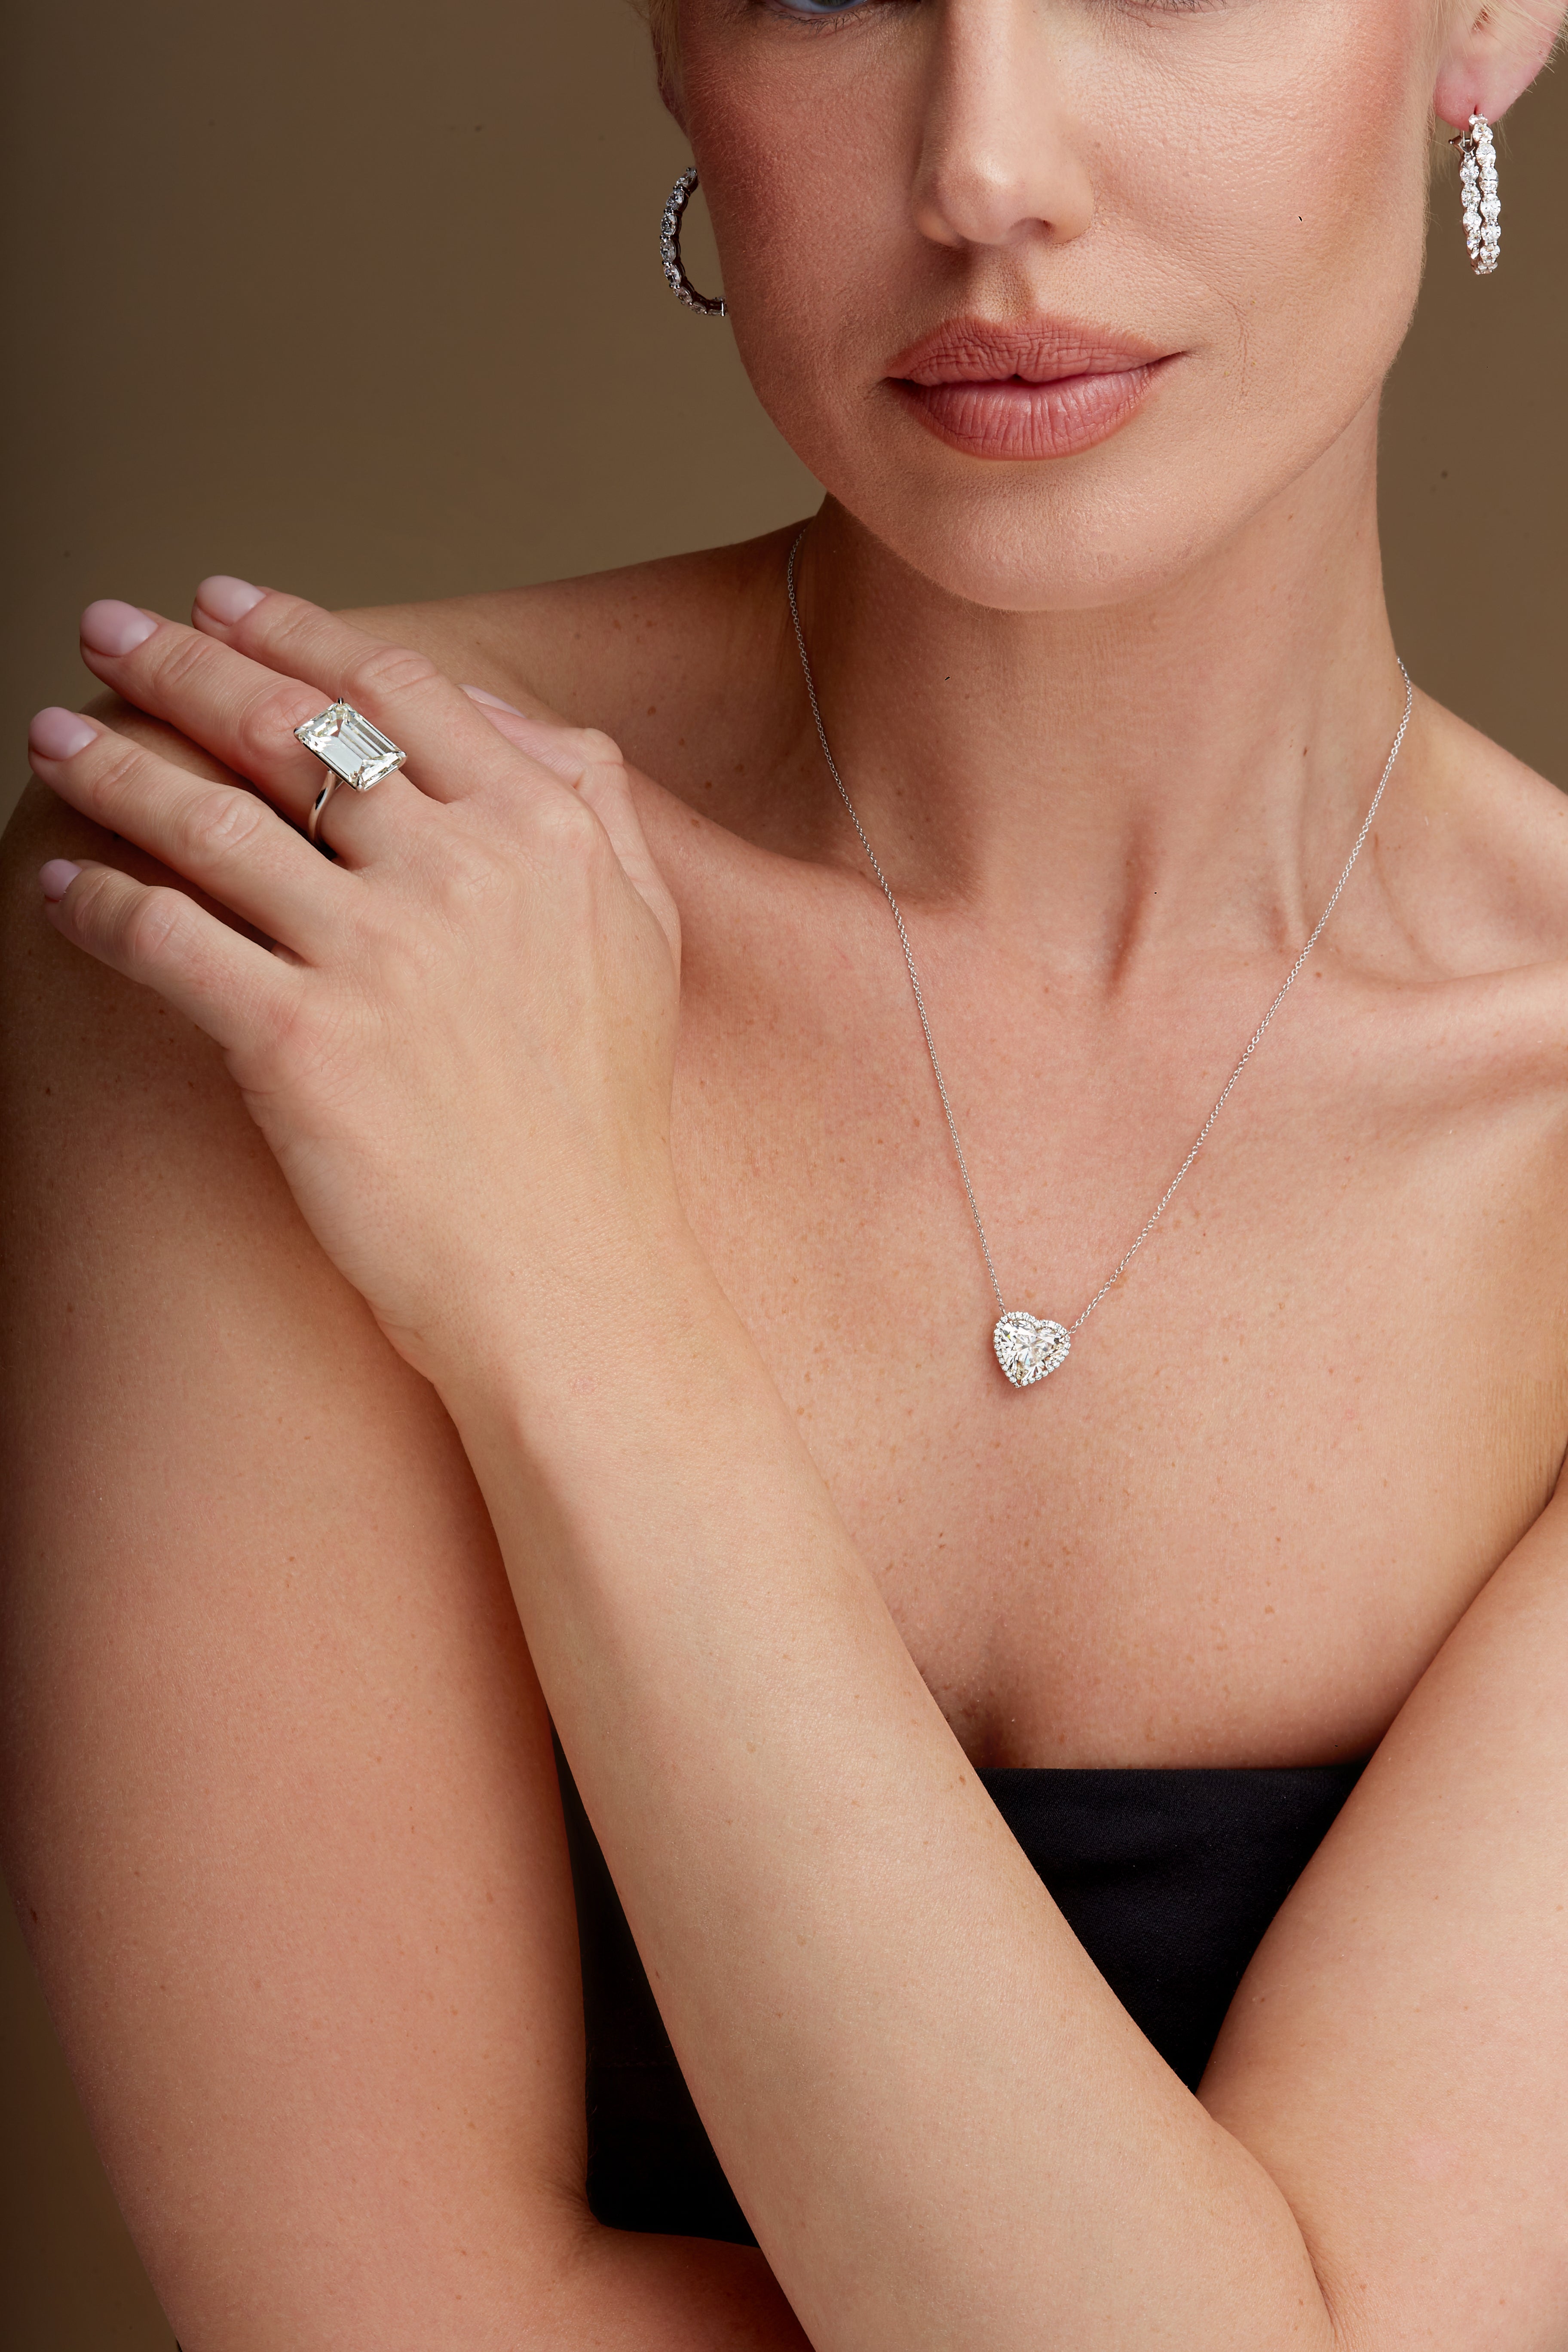 18k White Gold Heart Shape Diamond Pendant Necklace